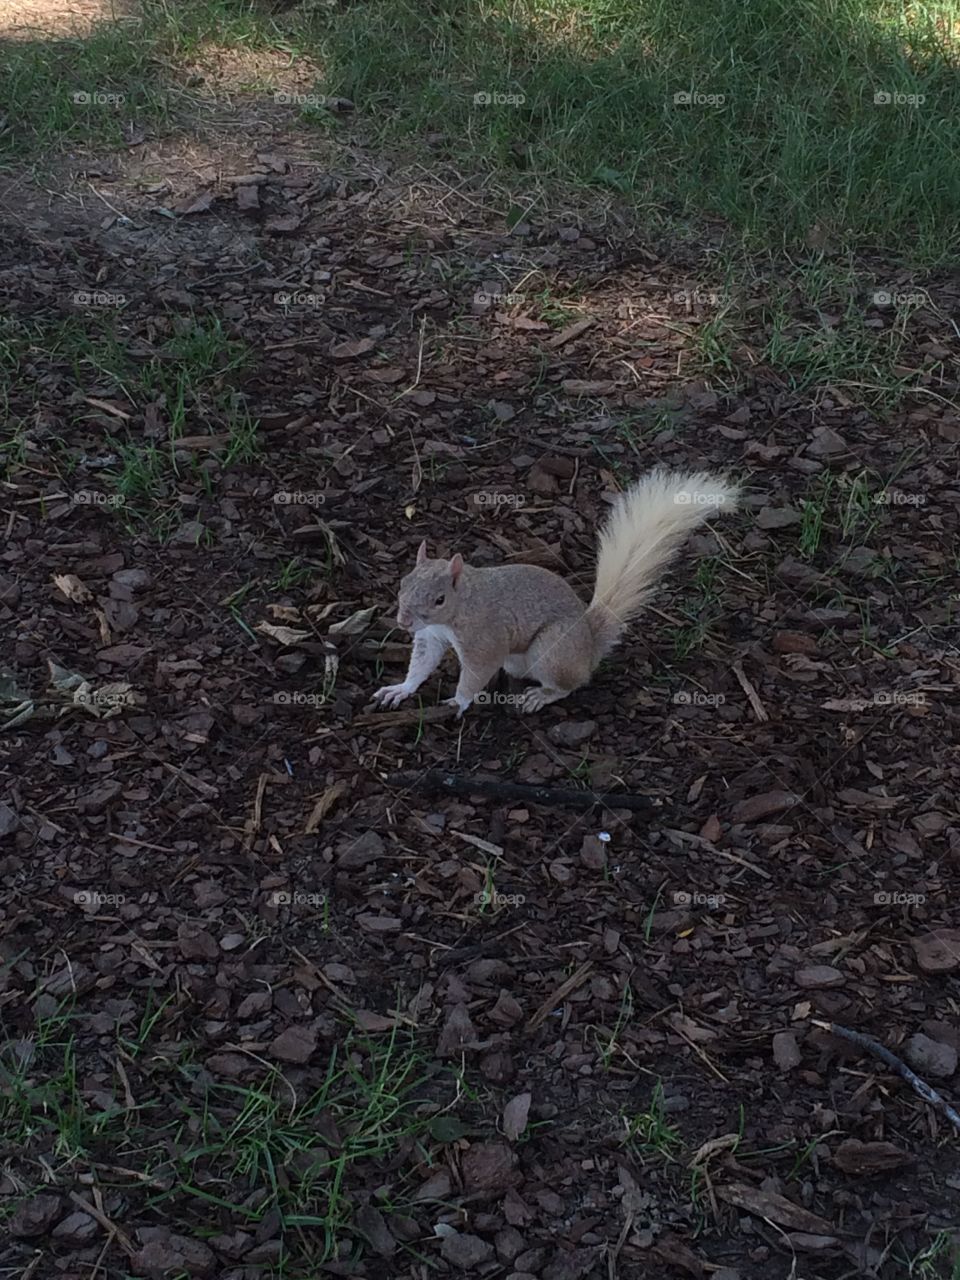 White Squirrel in DC park